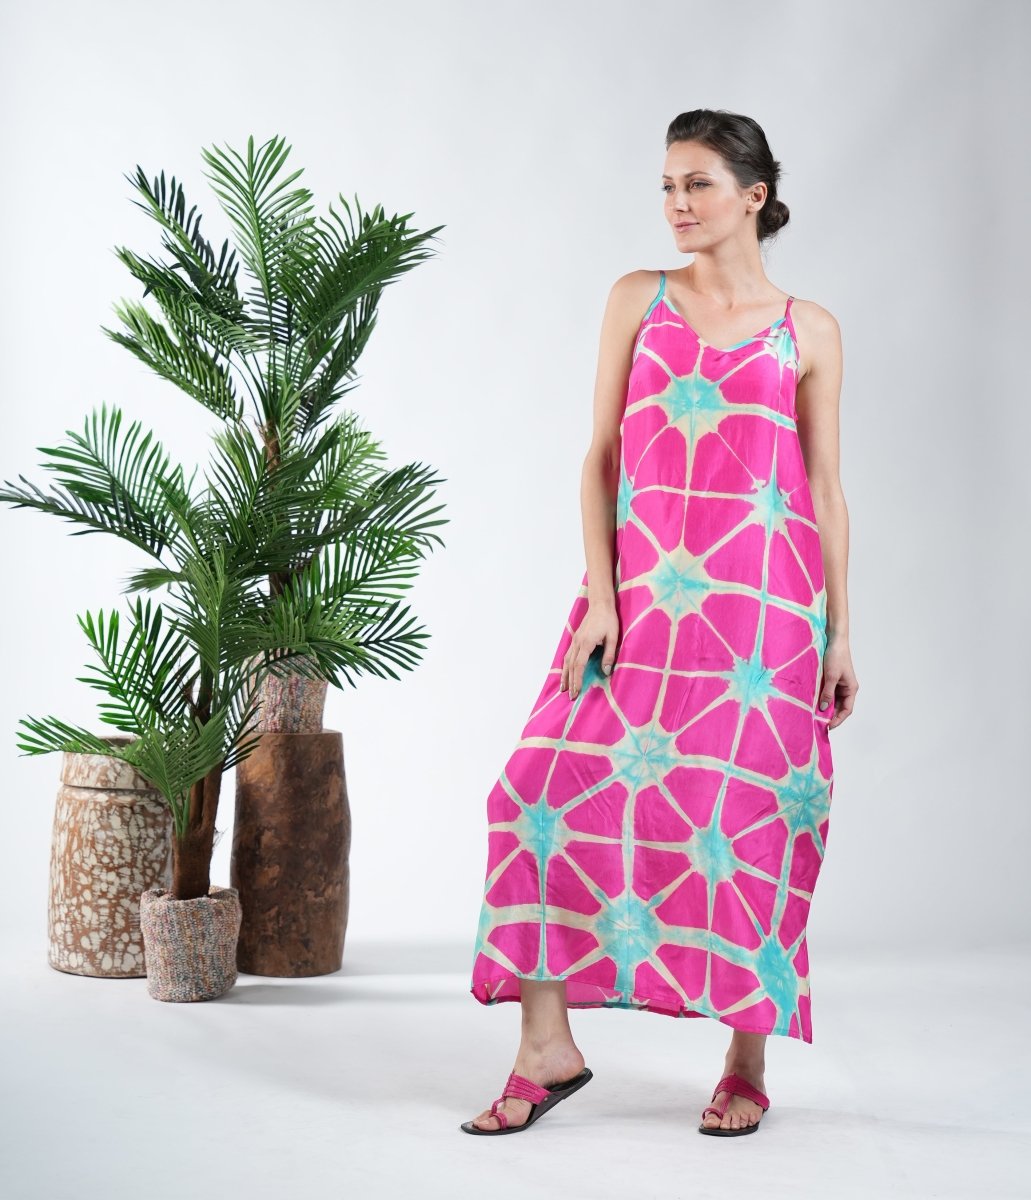 Palma star pink dress - TANAVANA INC